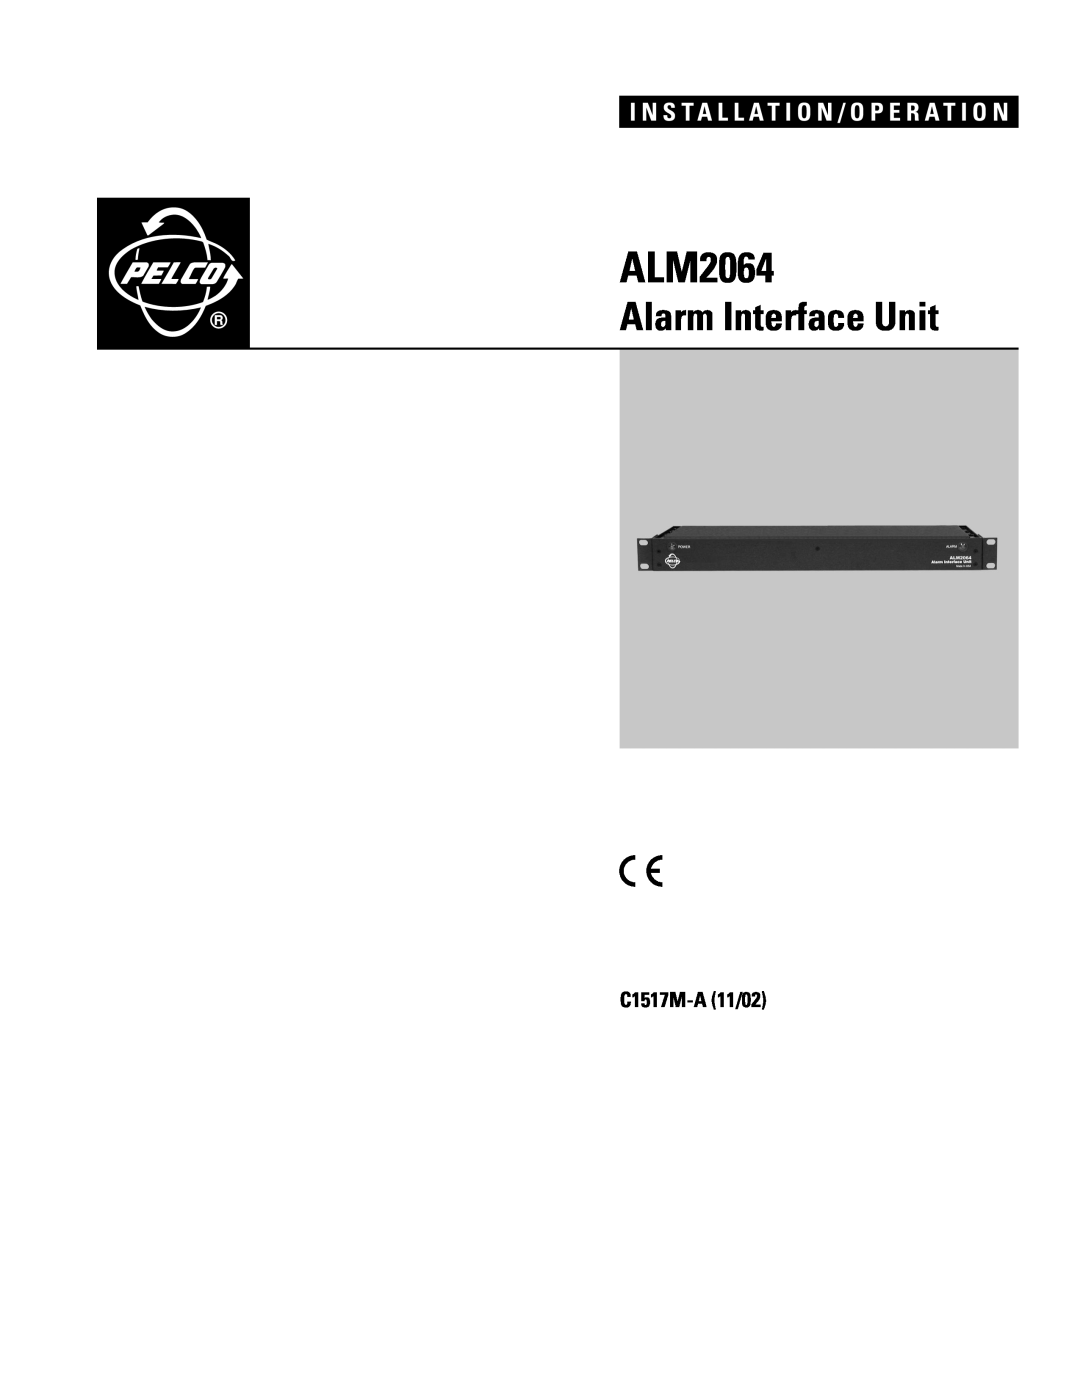 Pelco ALM2064 manual C1517M-A11/02, Alarm Interface Unit, I N S T A L L A T I O N / O P E R A T I O N 